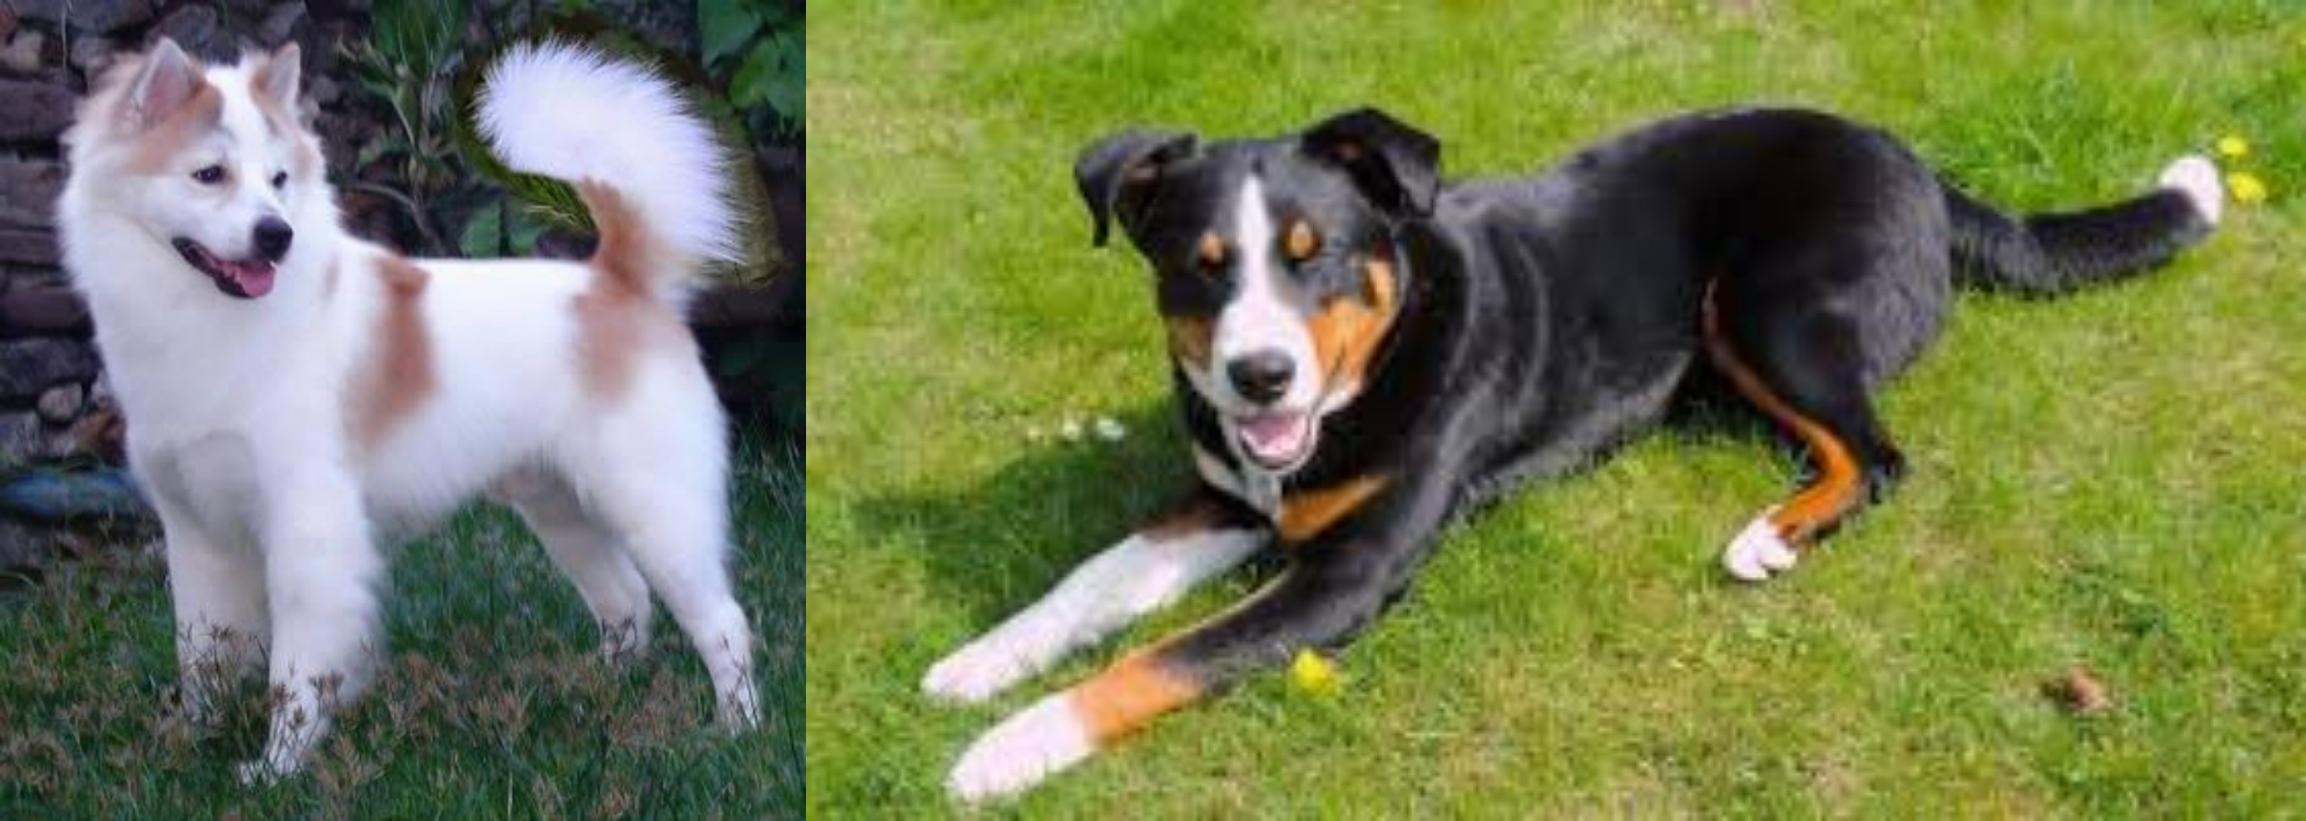 Thai Bangkaew Vs Appenzell Mountain Dog Breed Comparison